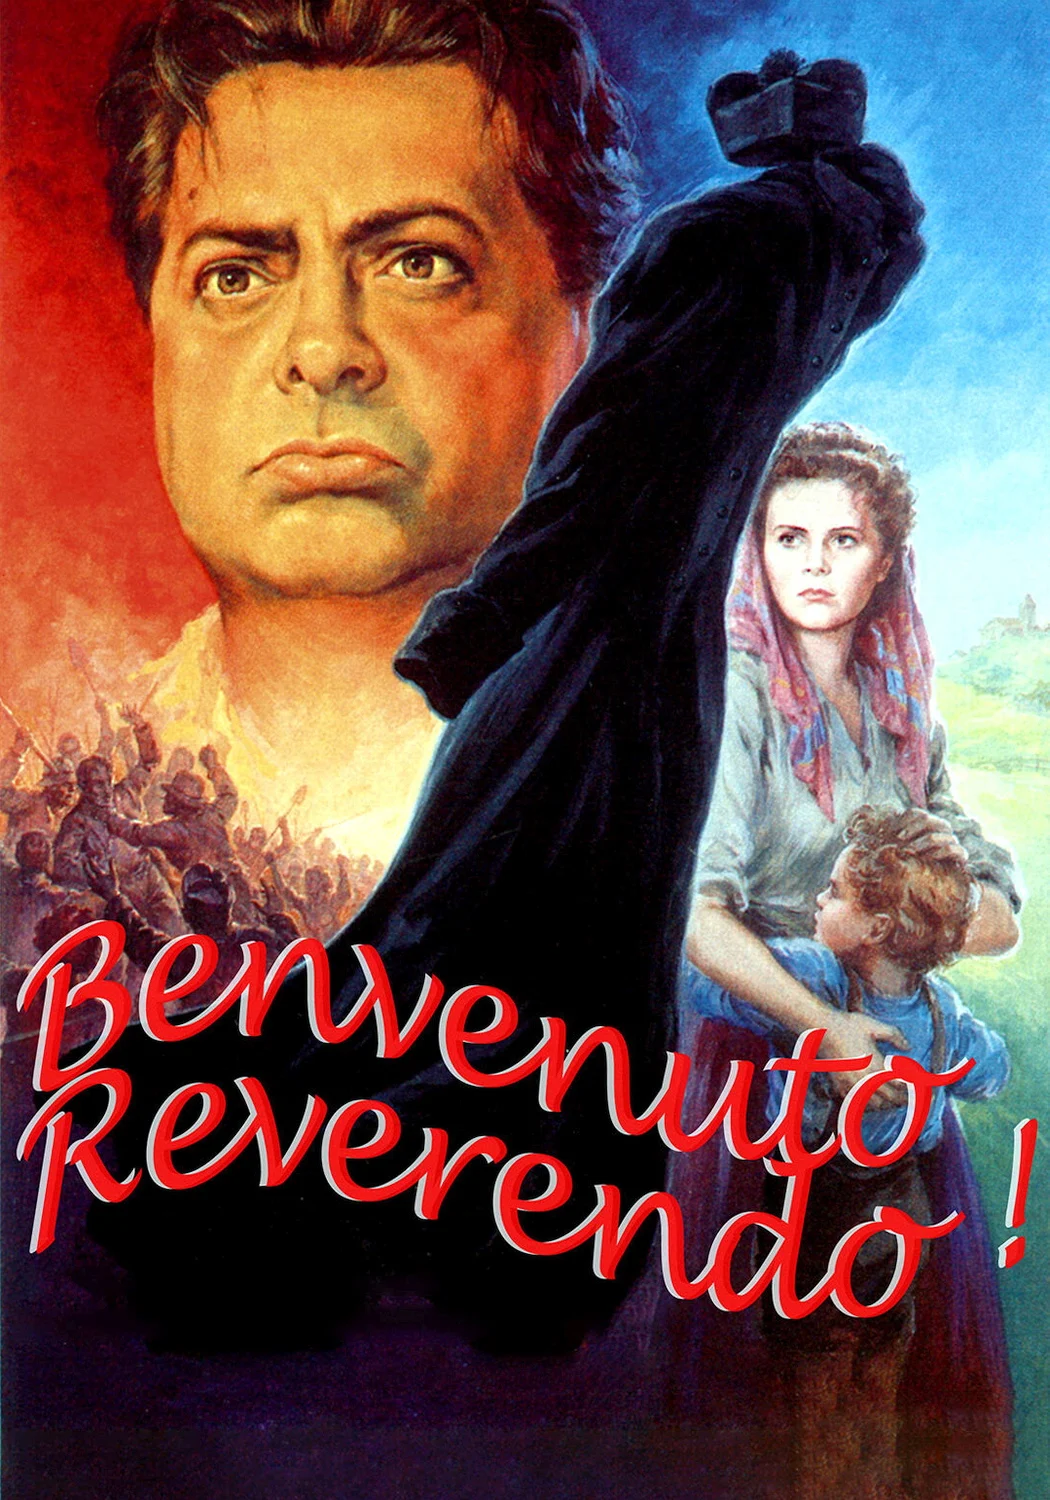 Benvenuto reverendo! [B/N] (1949)